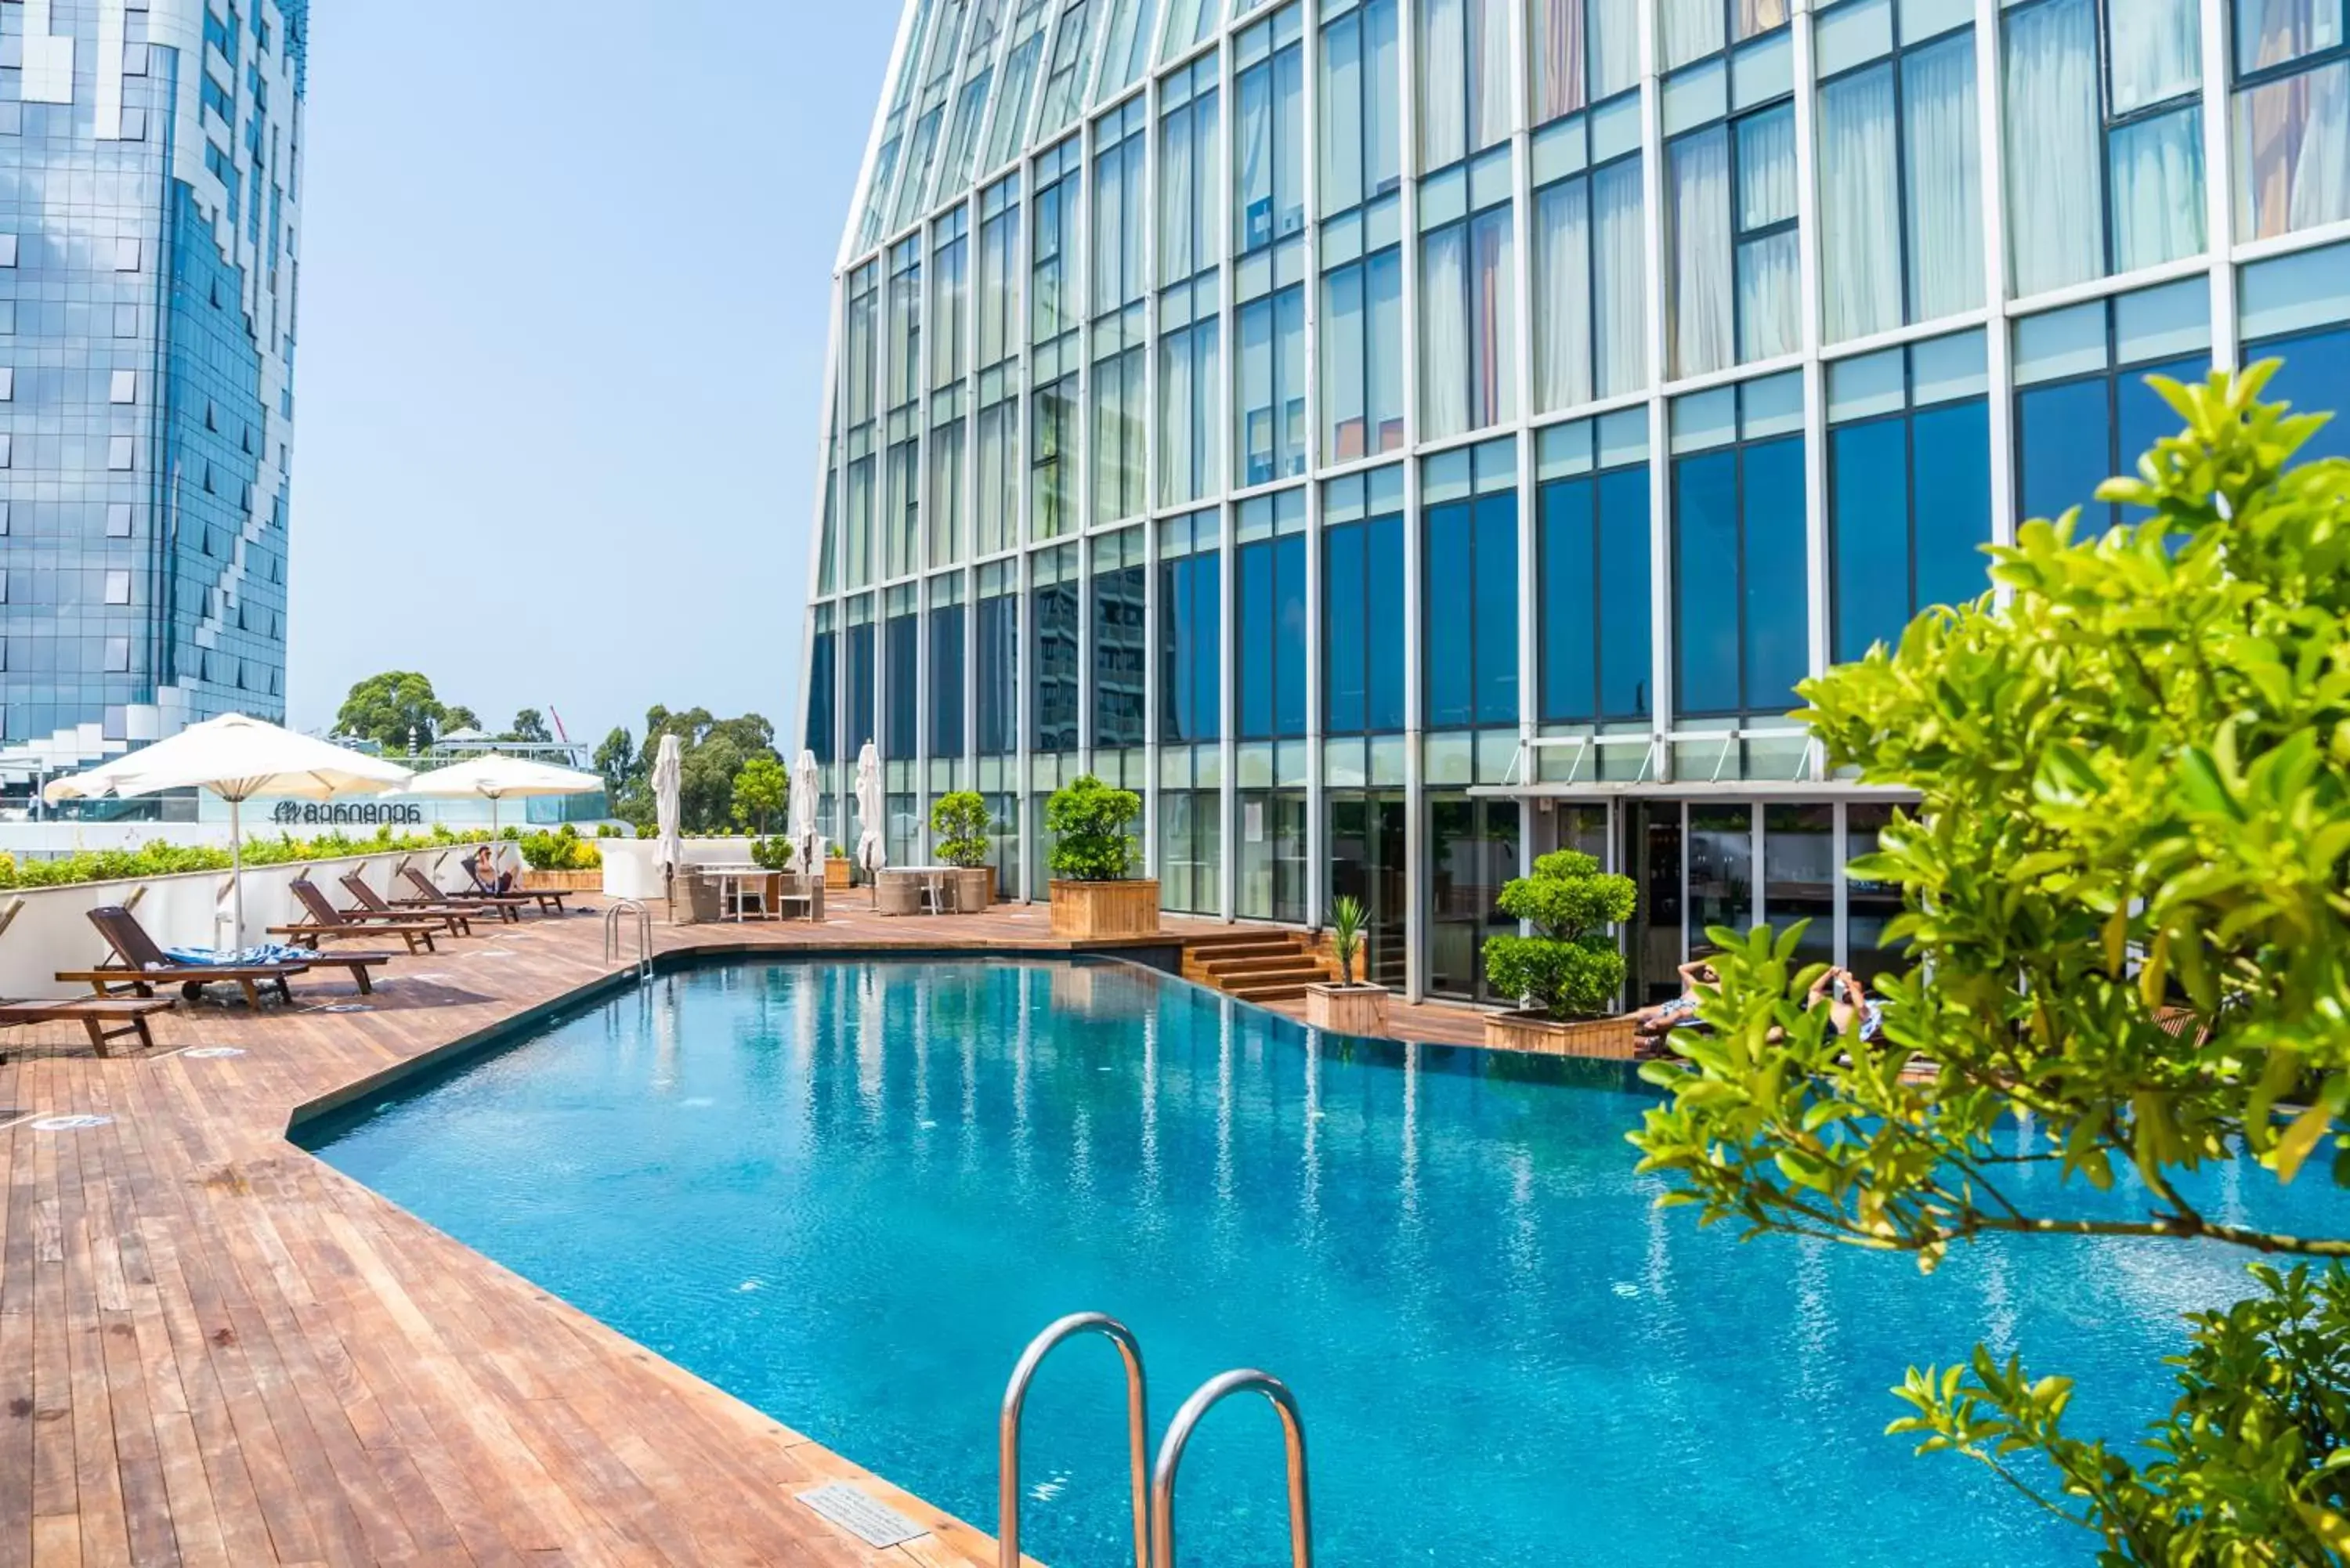 Swimming Pool in Radisson Blu Hotel Batumi